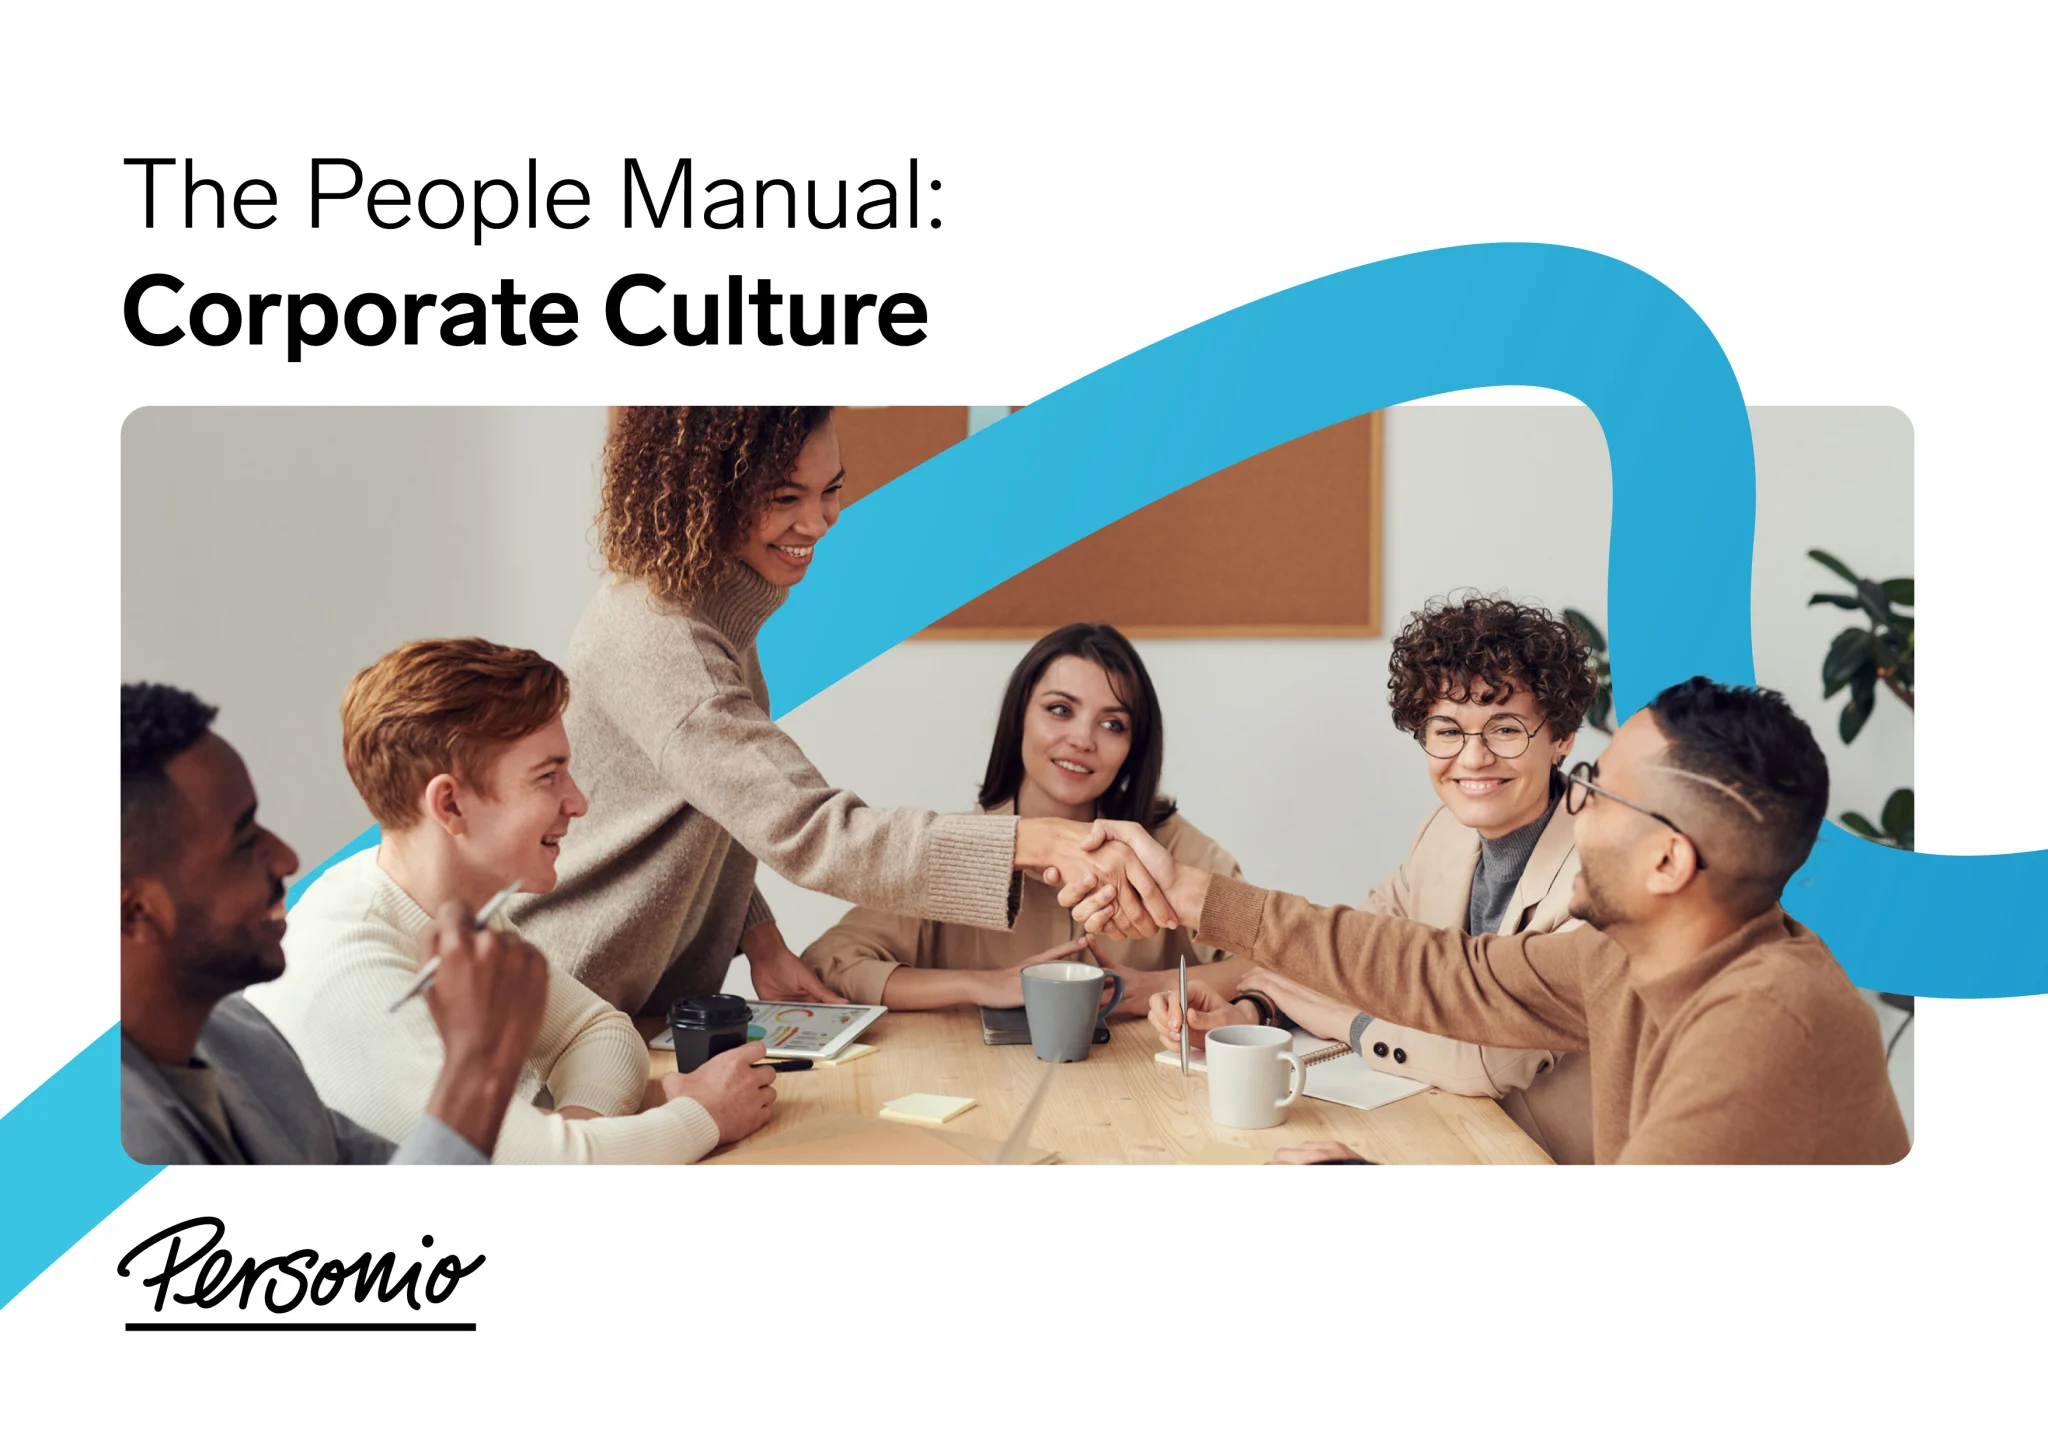 The People Manual: Corporate Culture